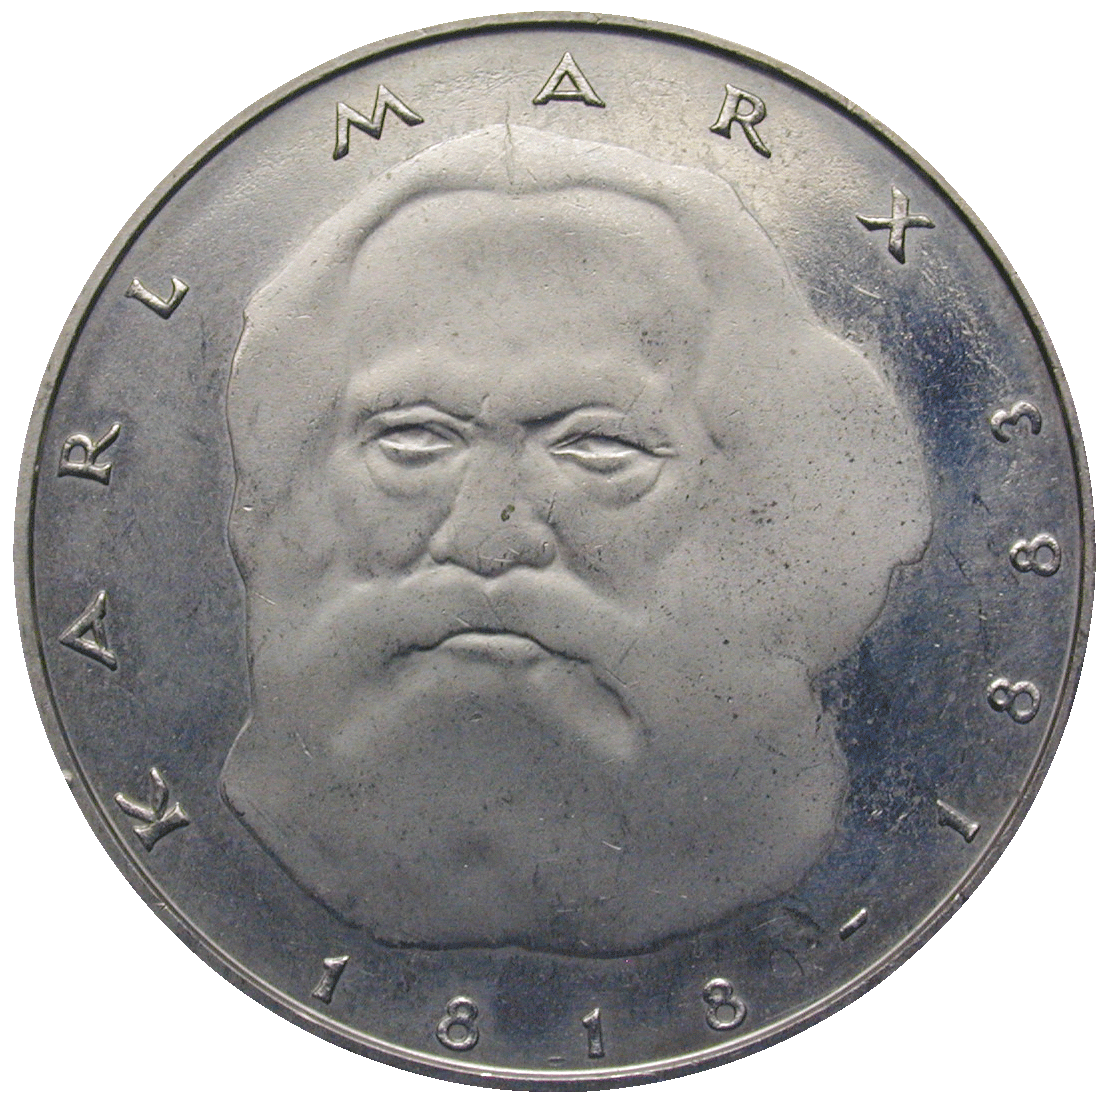 Federal Republic of Germany, 5 Deutsche Mark 1983 (reverse)